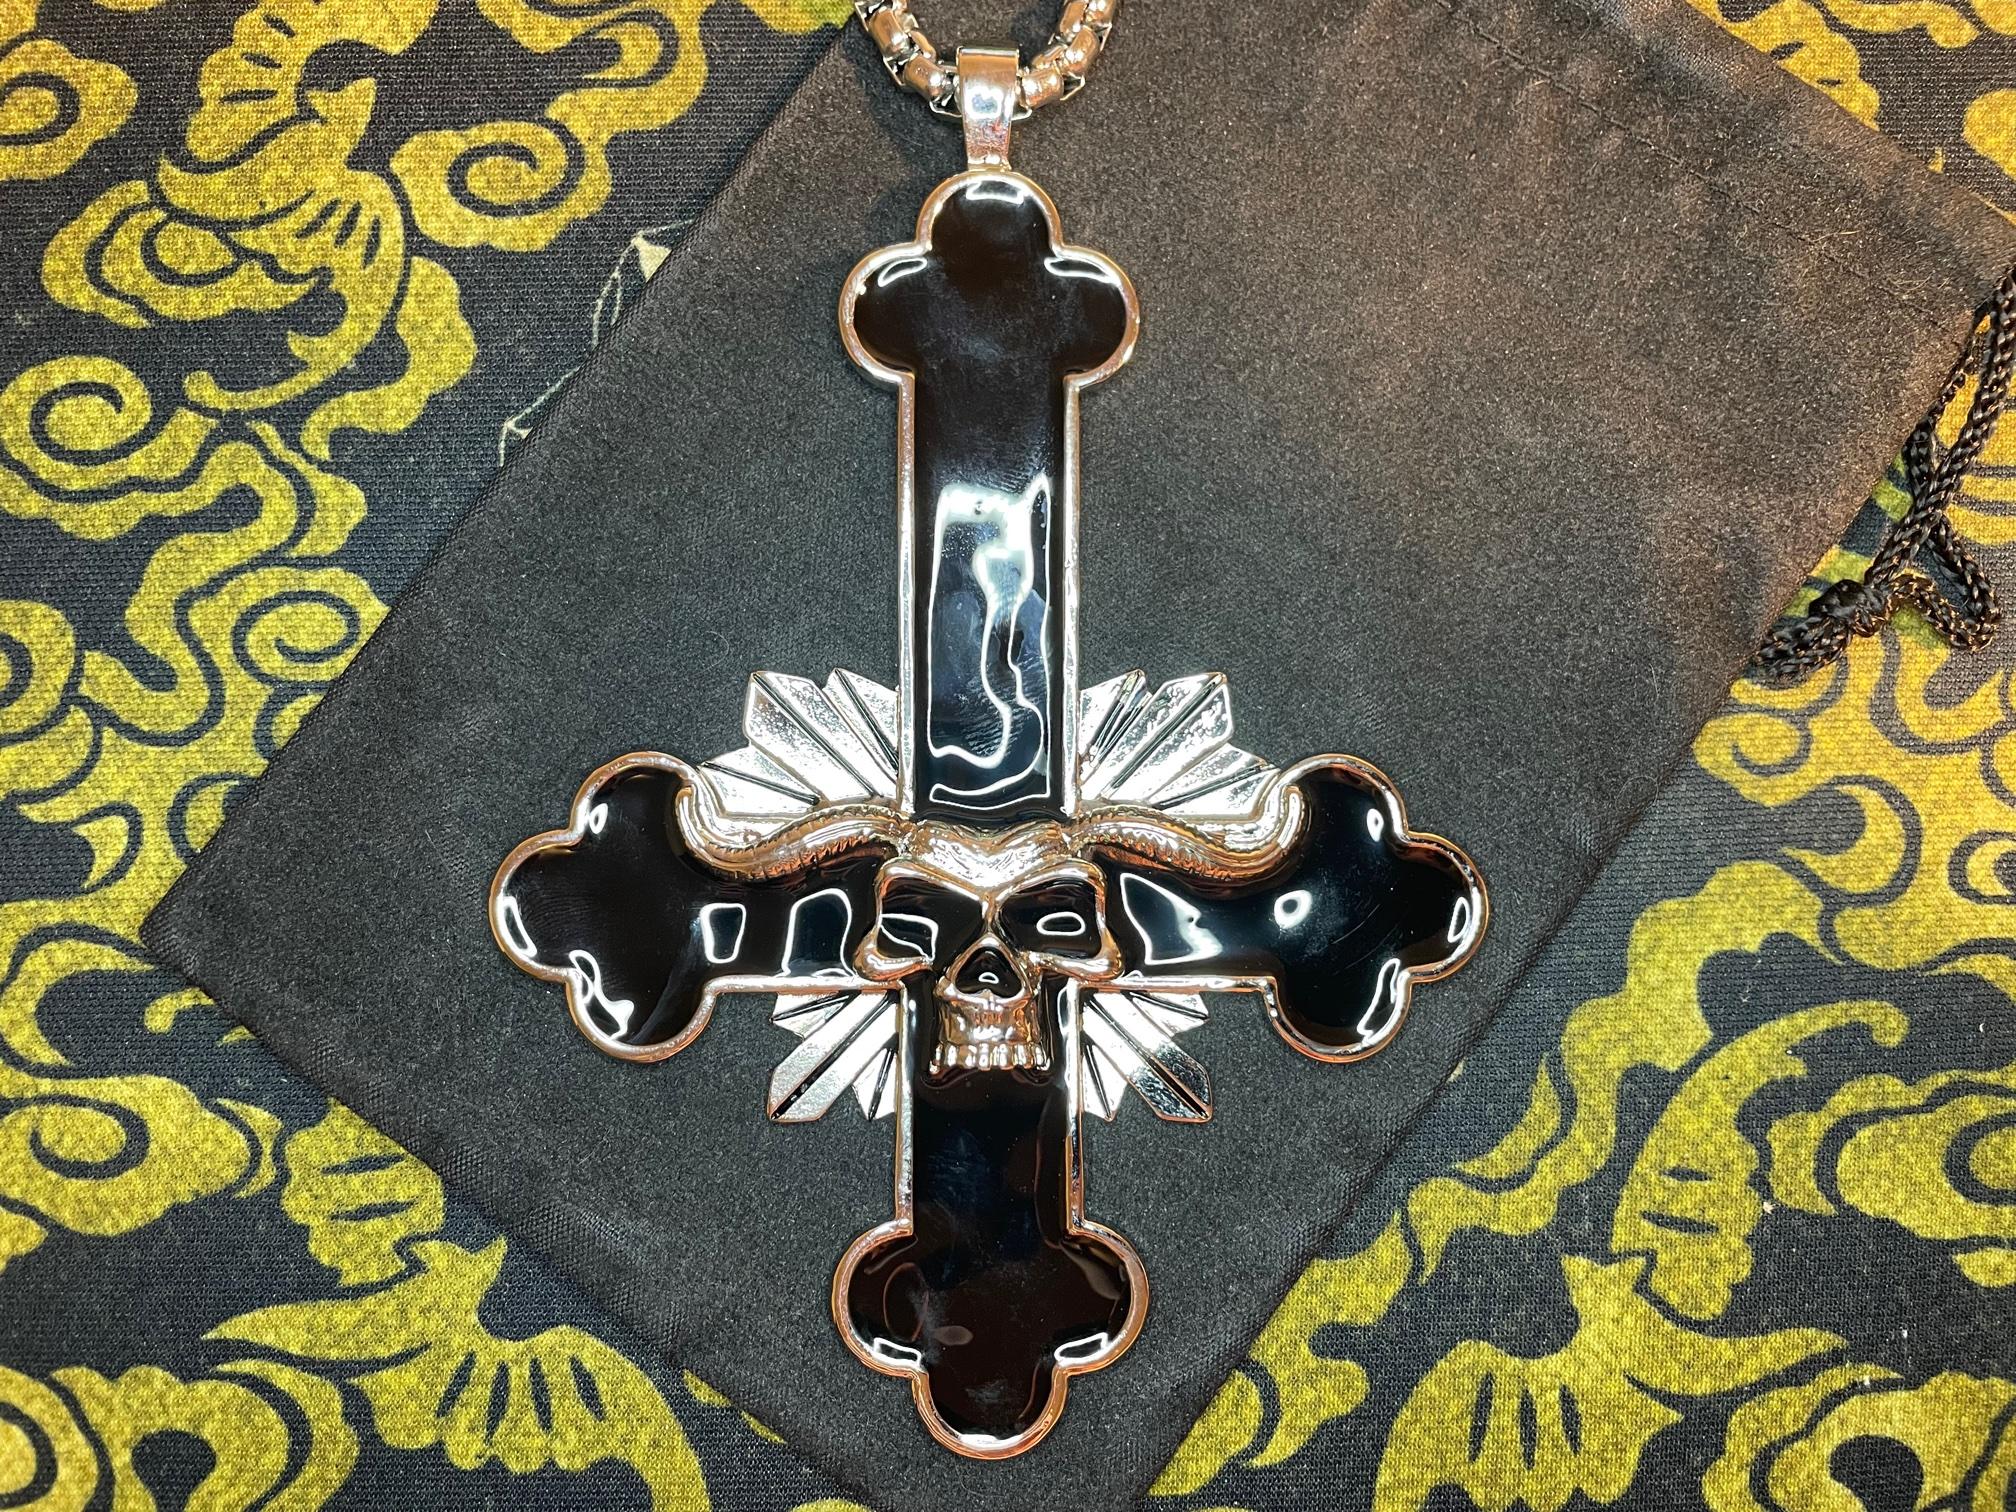 upside down inverted cross w/ horned skull pendant necklace